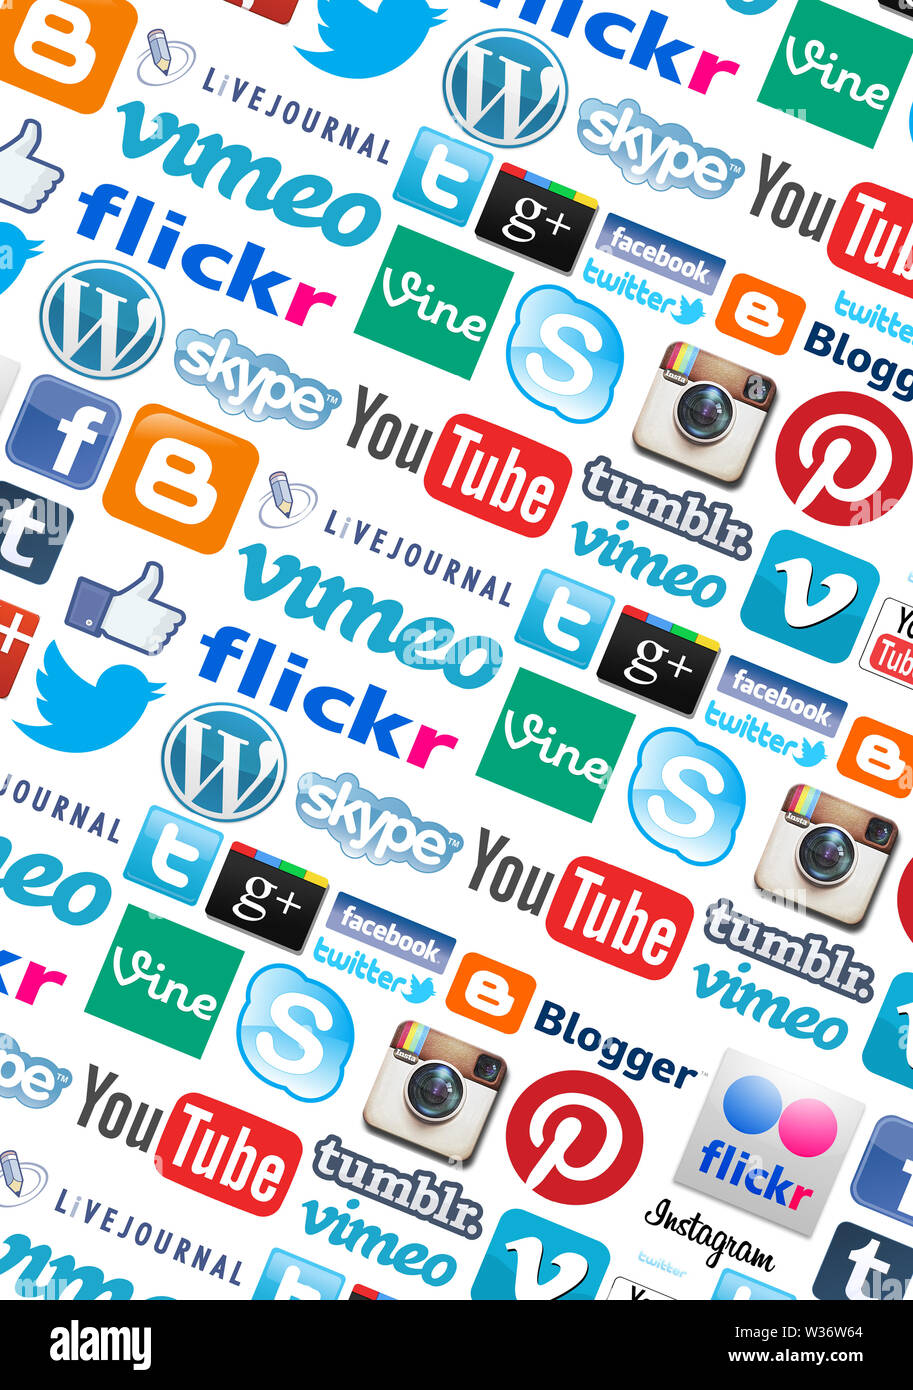 Illustration of various social media icons and logos. Stock Photo